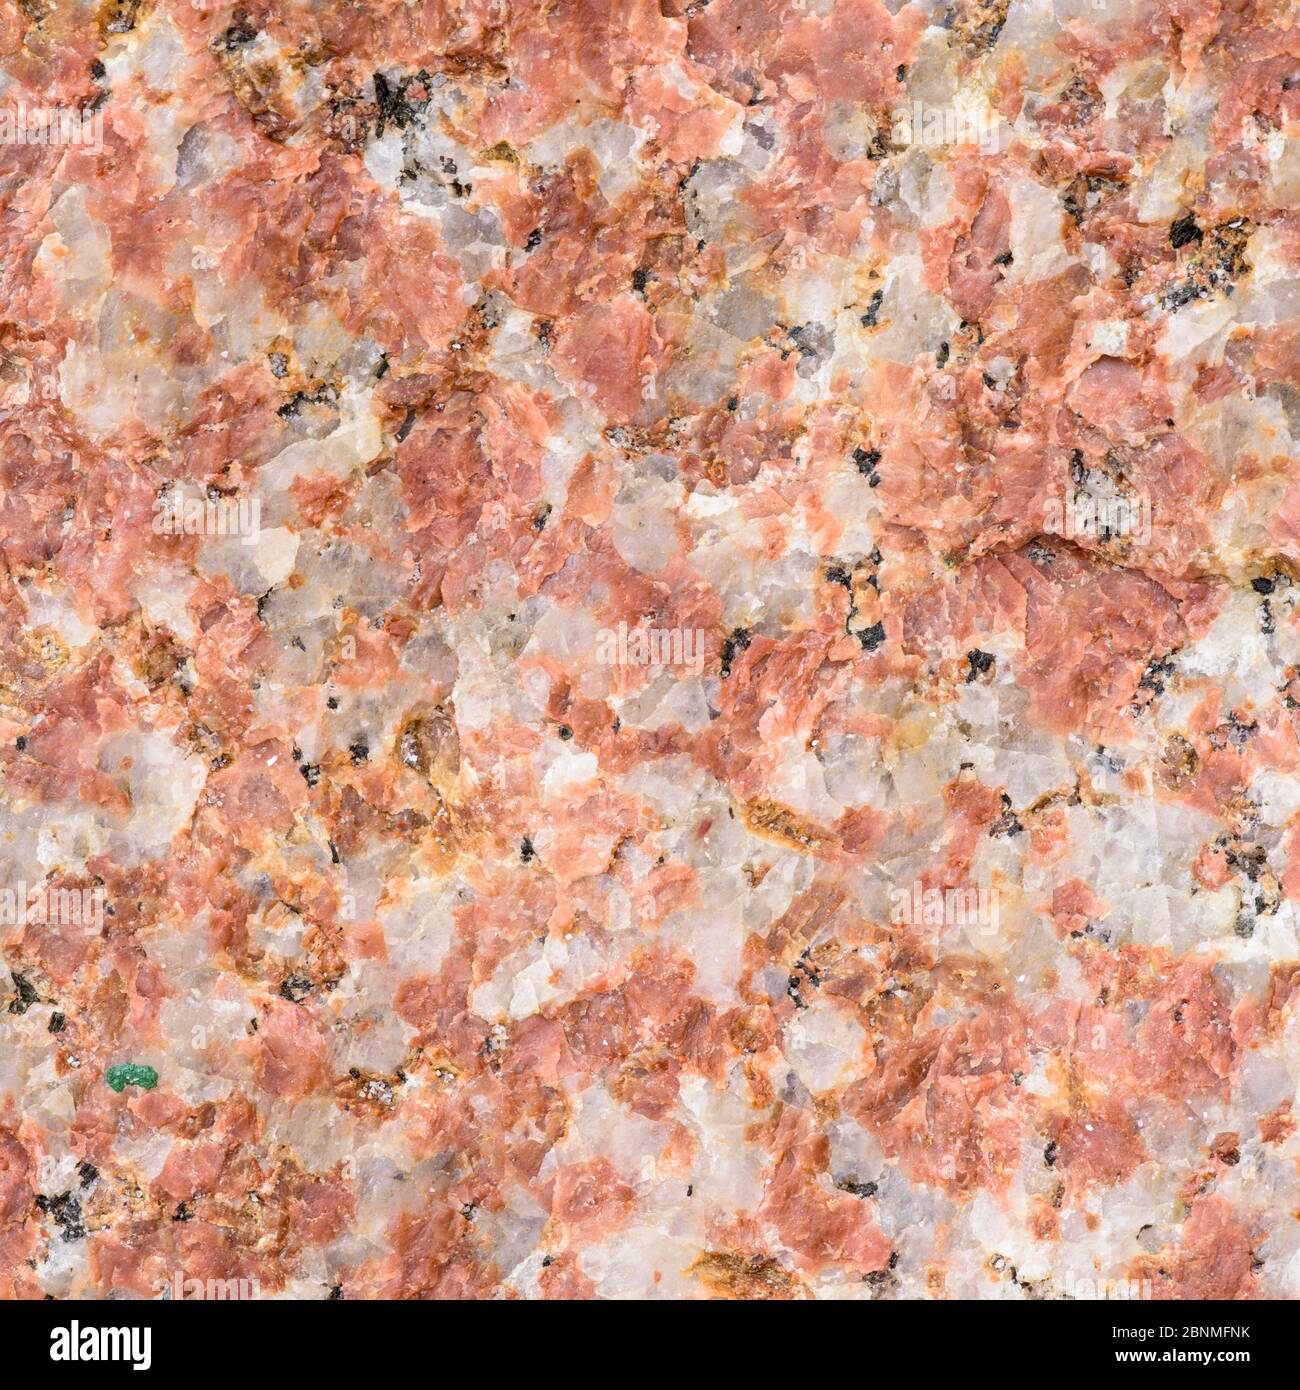 Granite rock sample, Fionnphort, Mull, Scotland Stock Photo